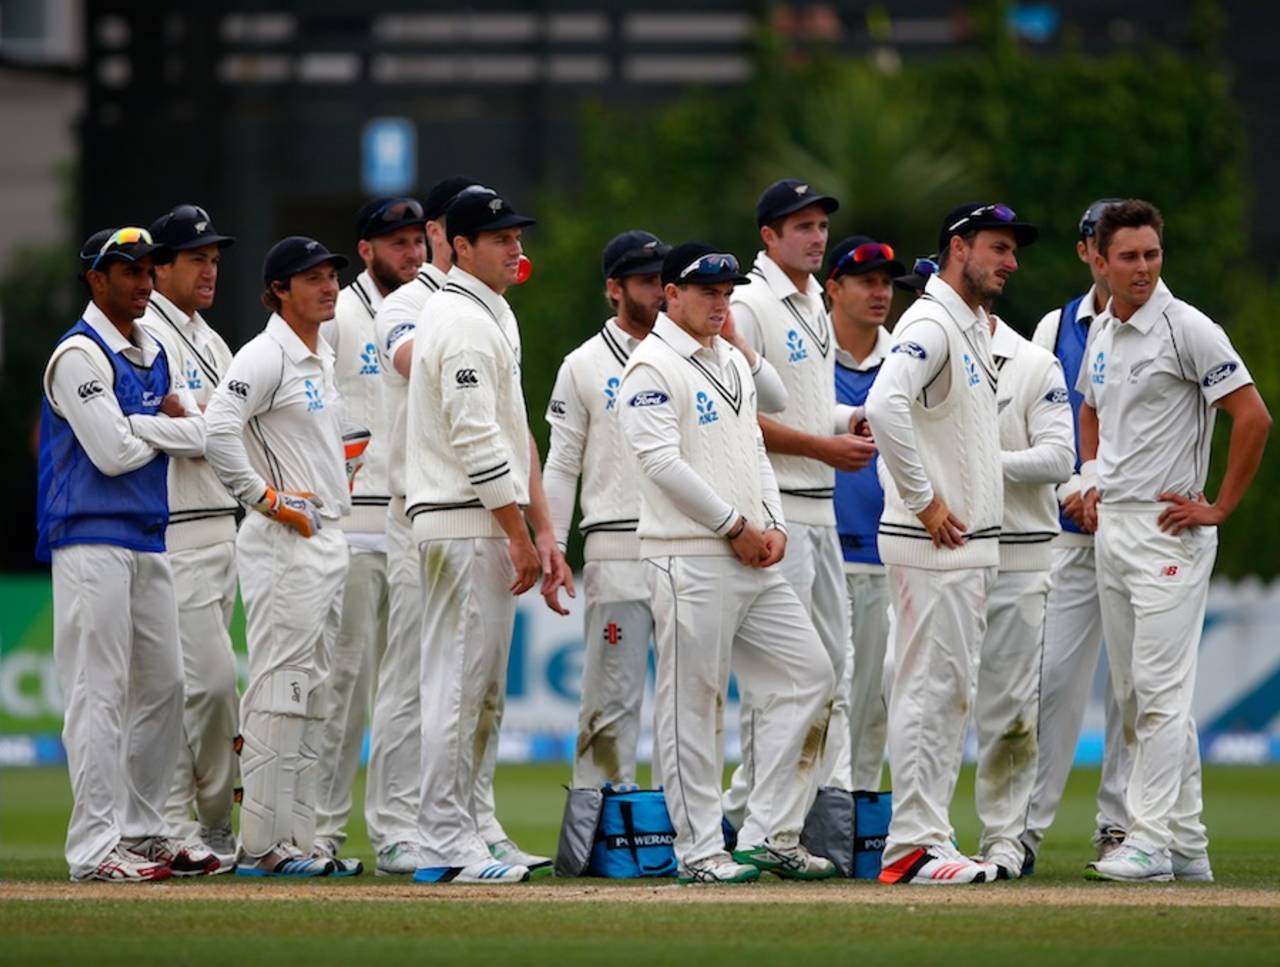 New Zealand wait for the referred decision on Kumar Sangakkara, New Zealand v Sri Lanka, 2nd Test, Wellington, 5th day, January 7, 2015